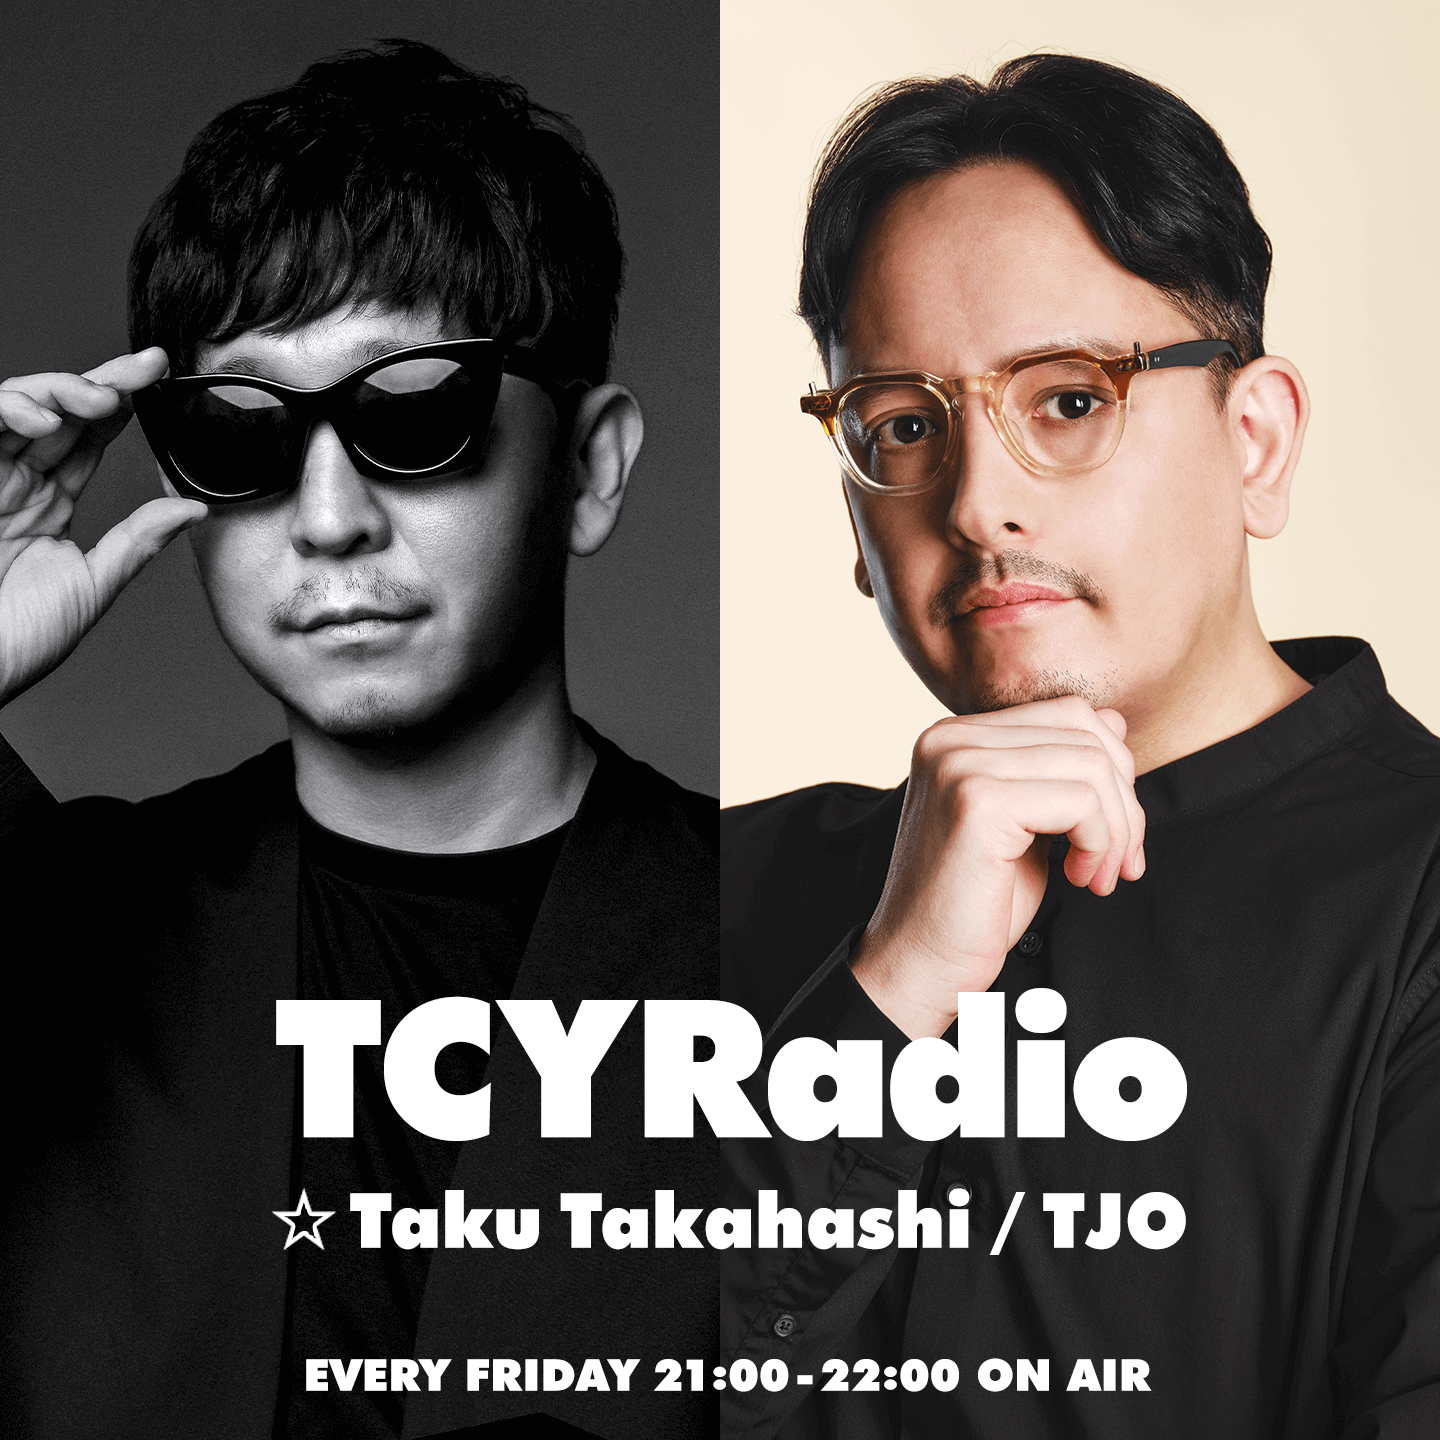 TCY Radio